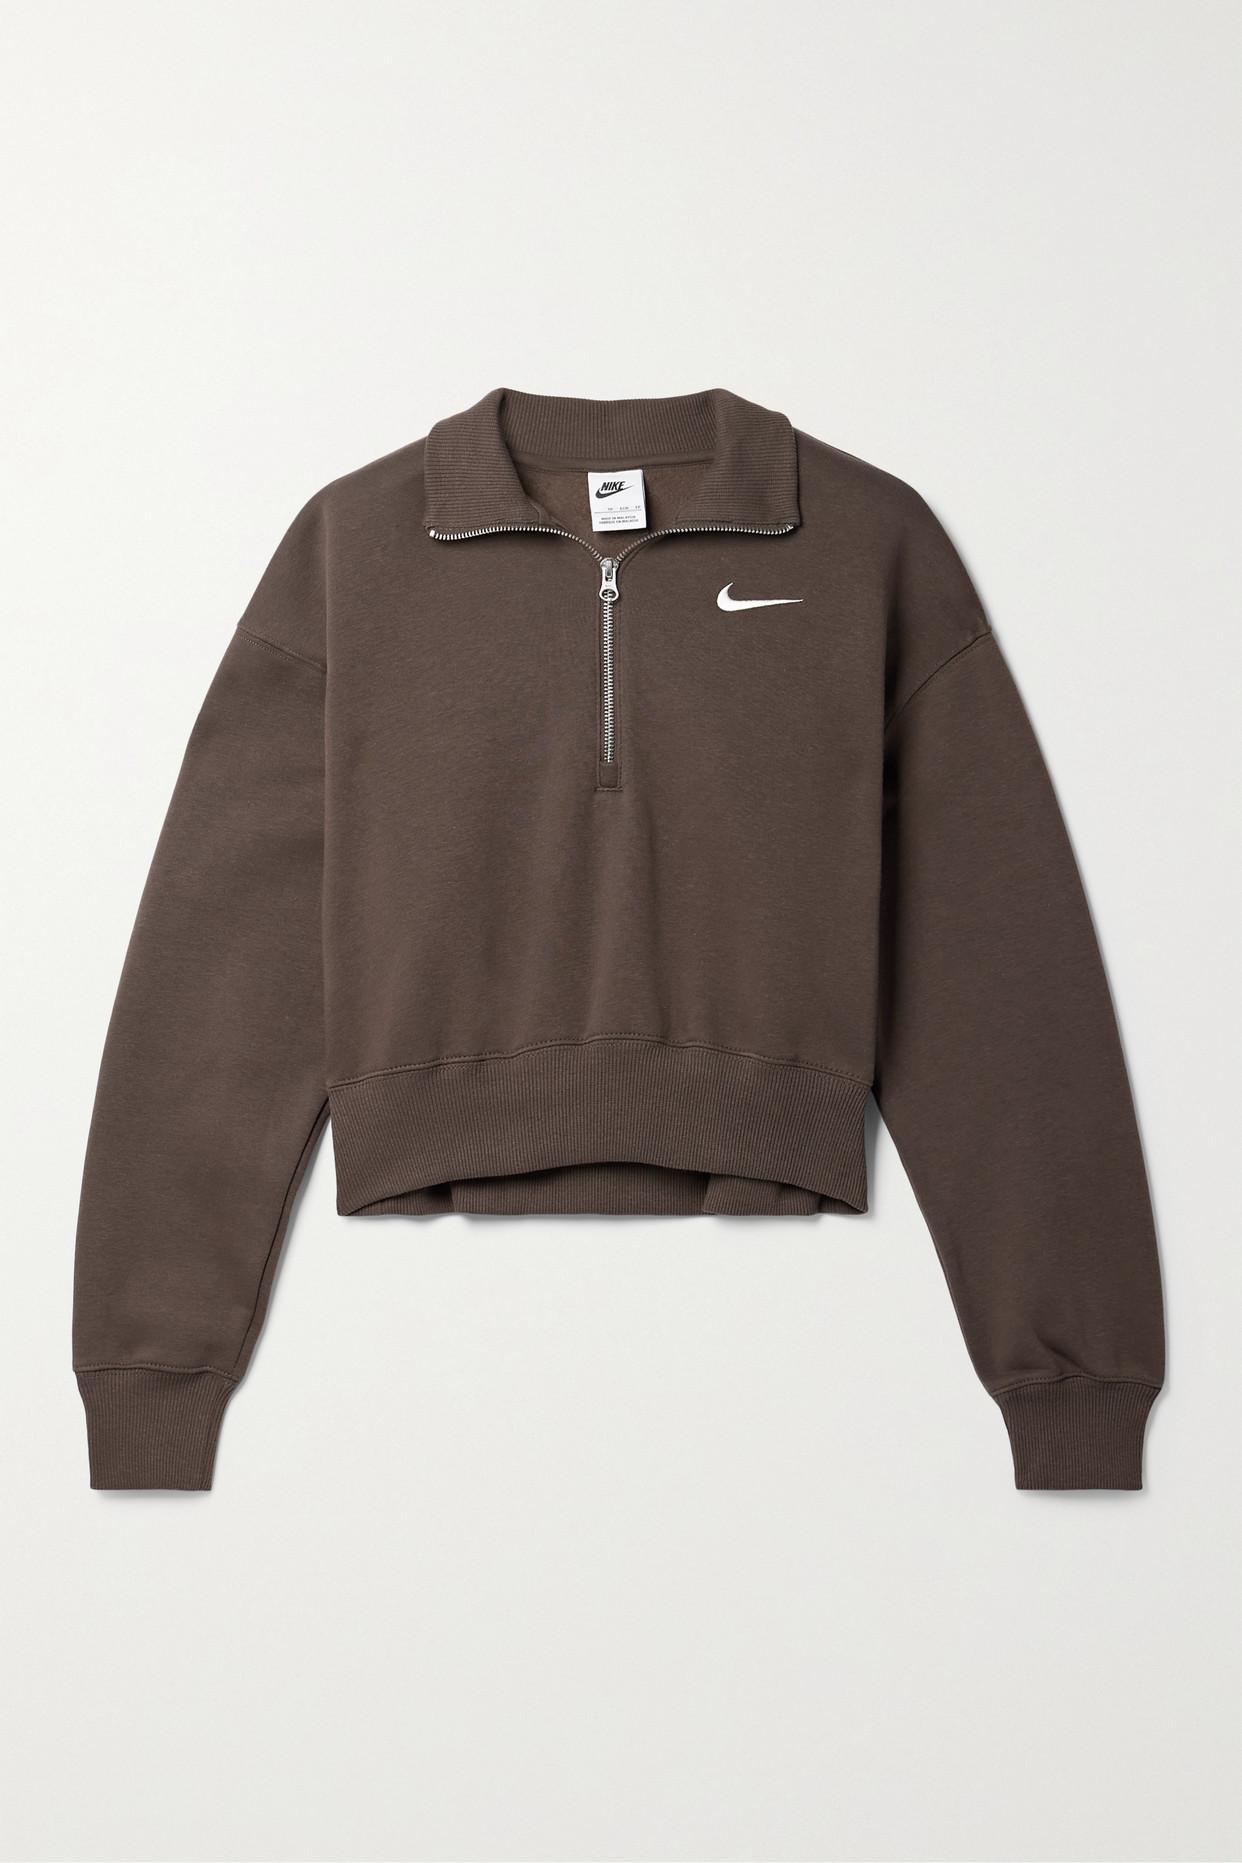 Nike Phoenix Embroidered Cotton-blend Jersey Sweatshirt in Brown | Lyst